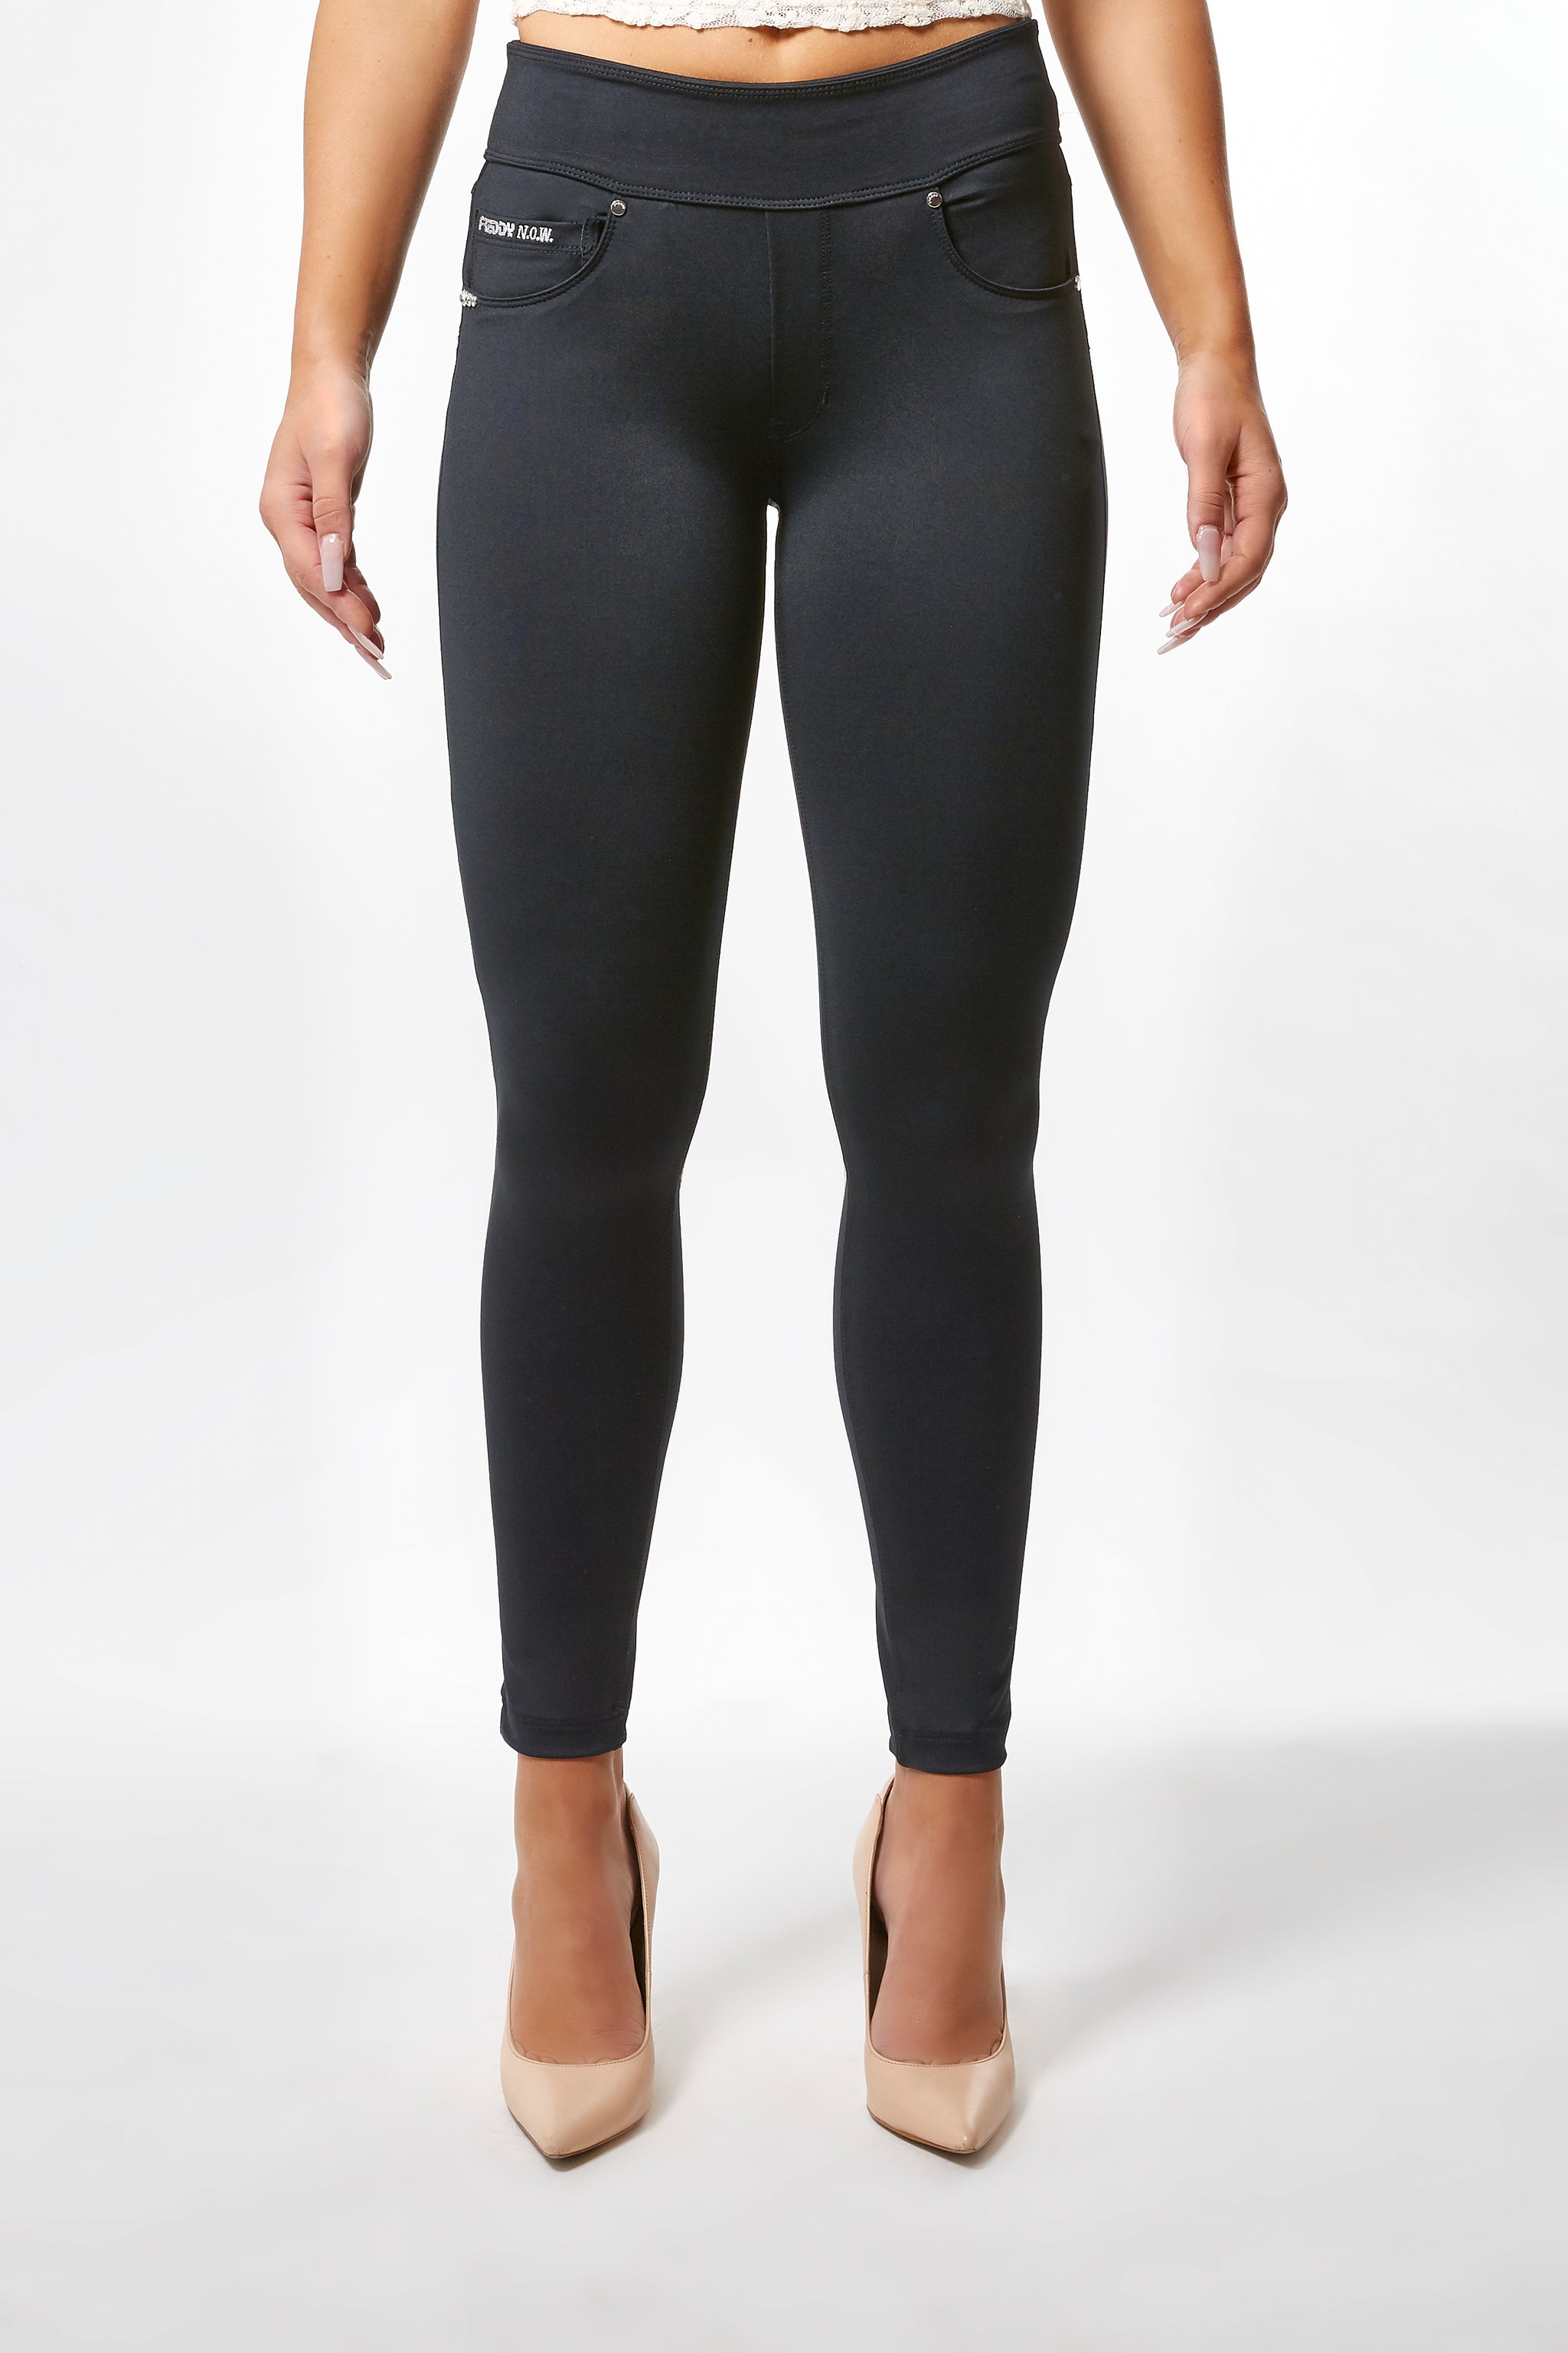 Nylon High Waist Yoga Pants & Leggings, Solid, Slim Fit at Rs 760